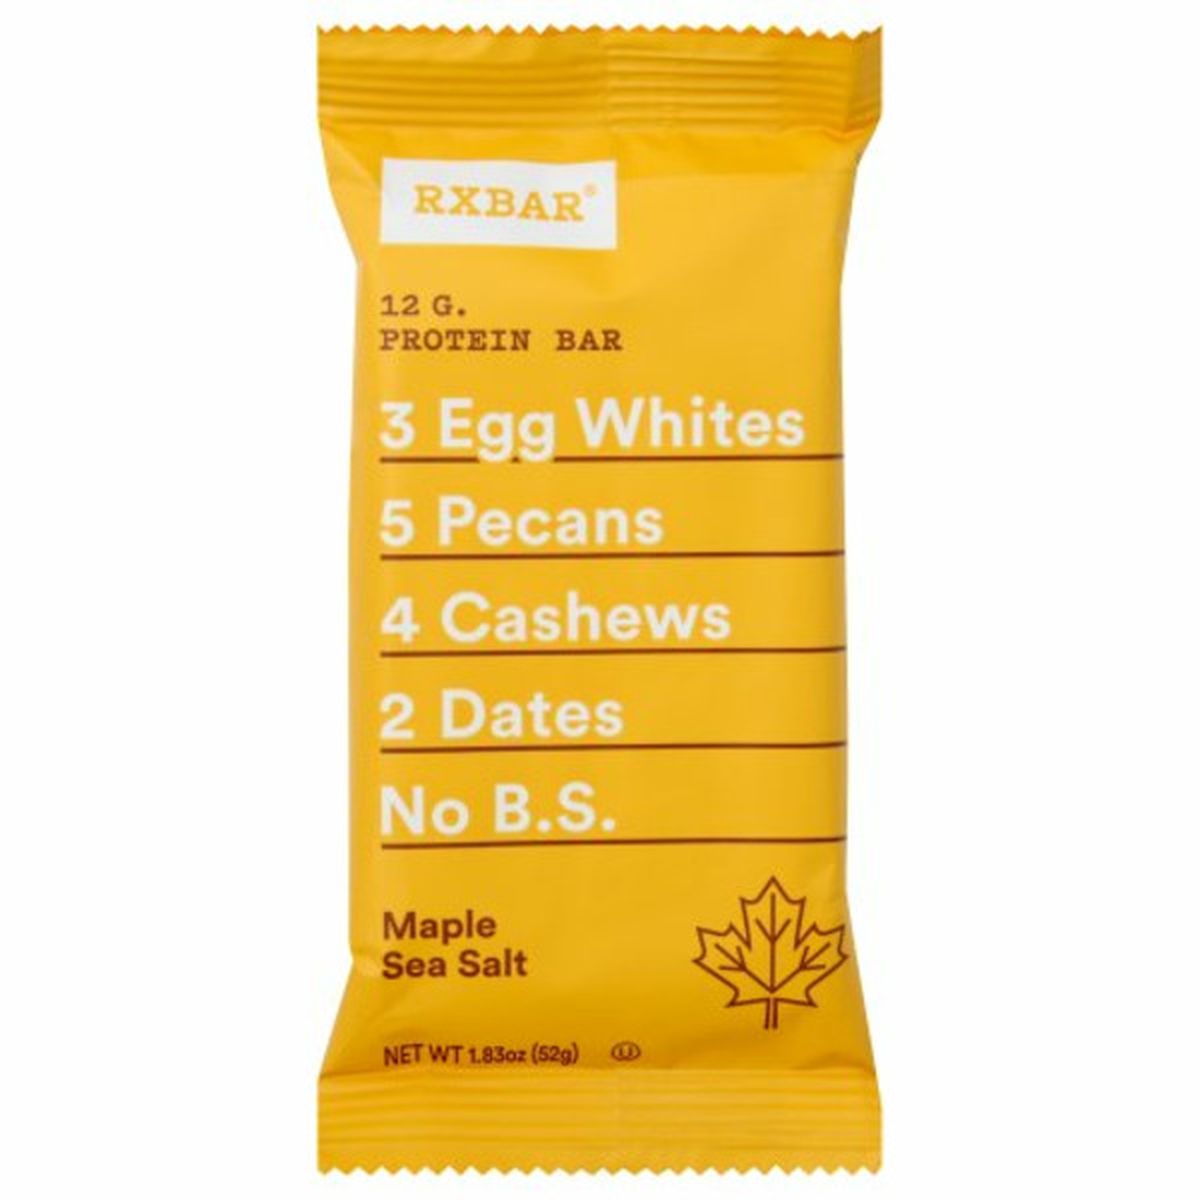 Calories in RXBAR Protein Bar, Maple Sea Salt